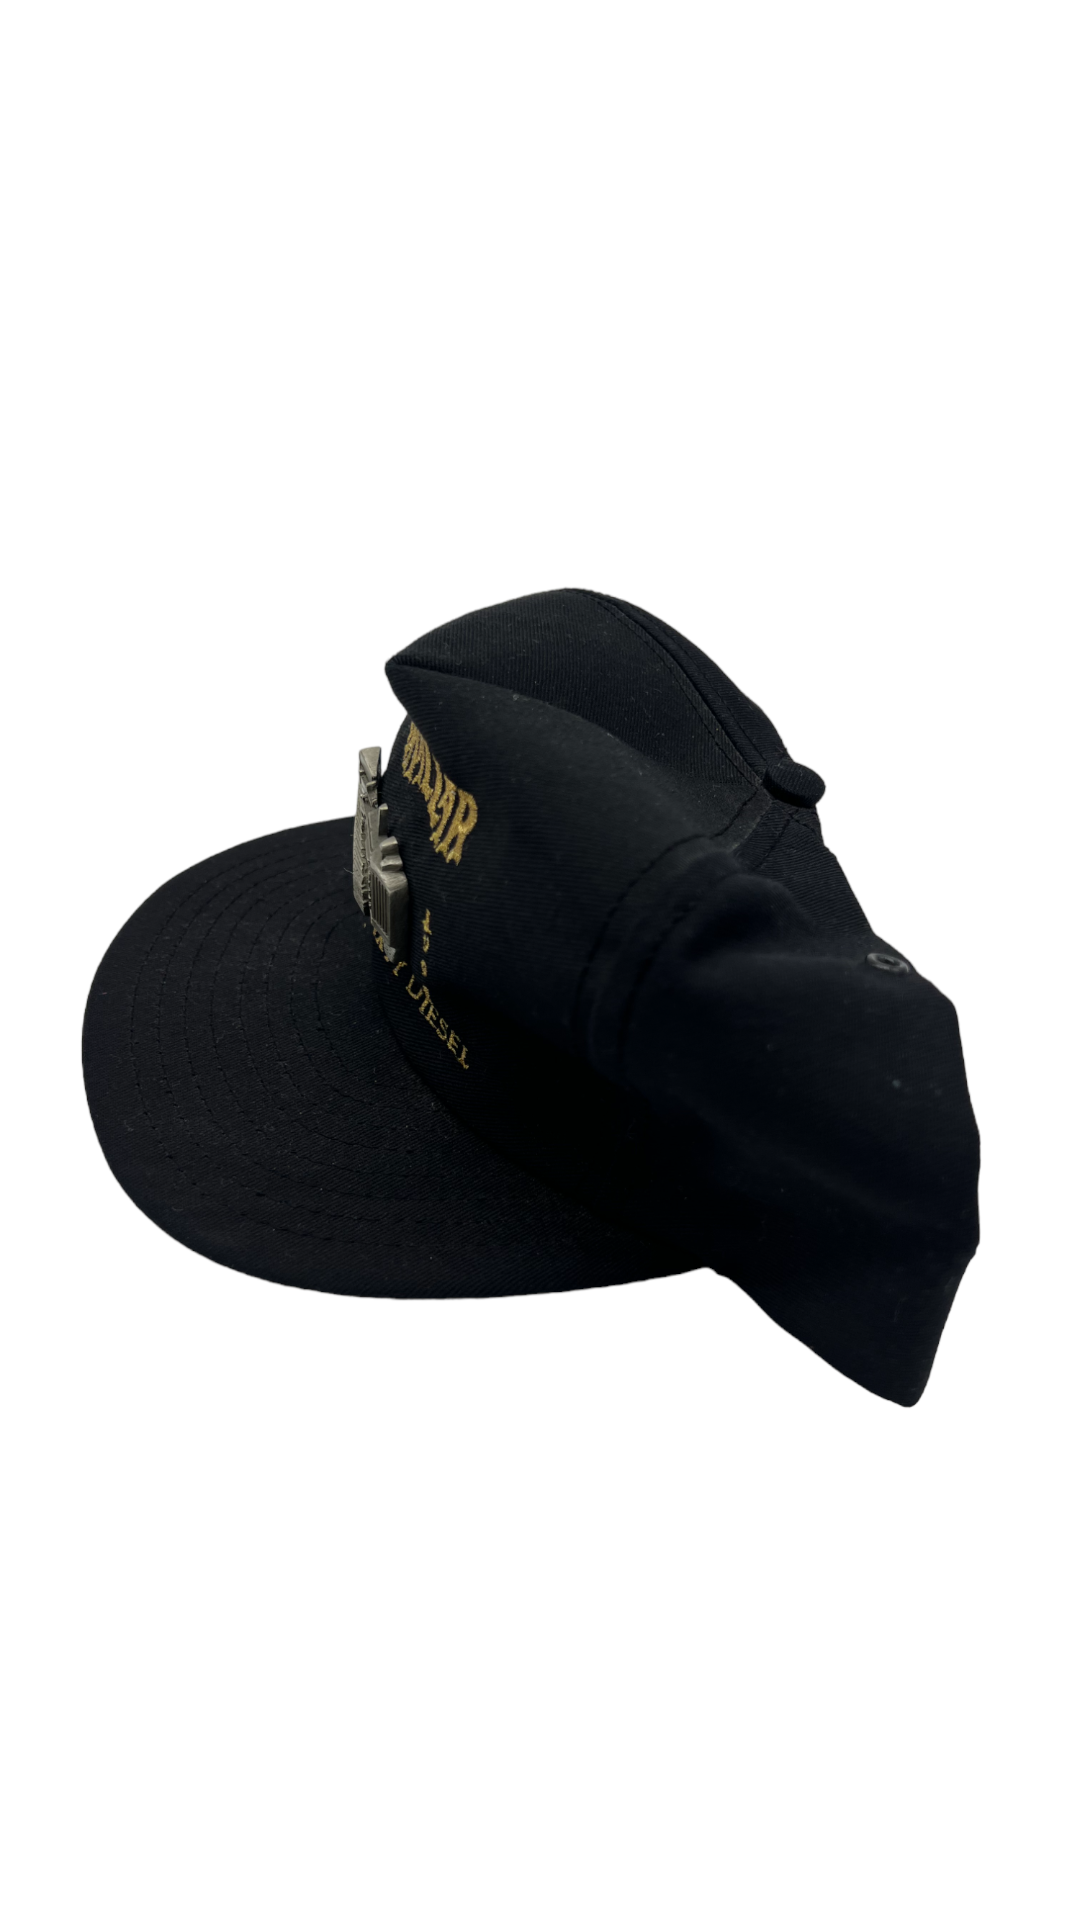 VTG Caterpillar Pewter Louisville Mfg Co Snapback Hat